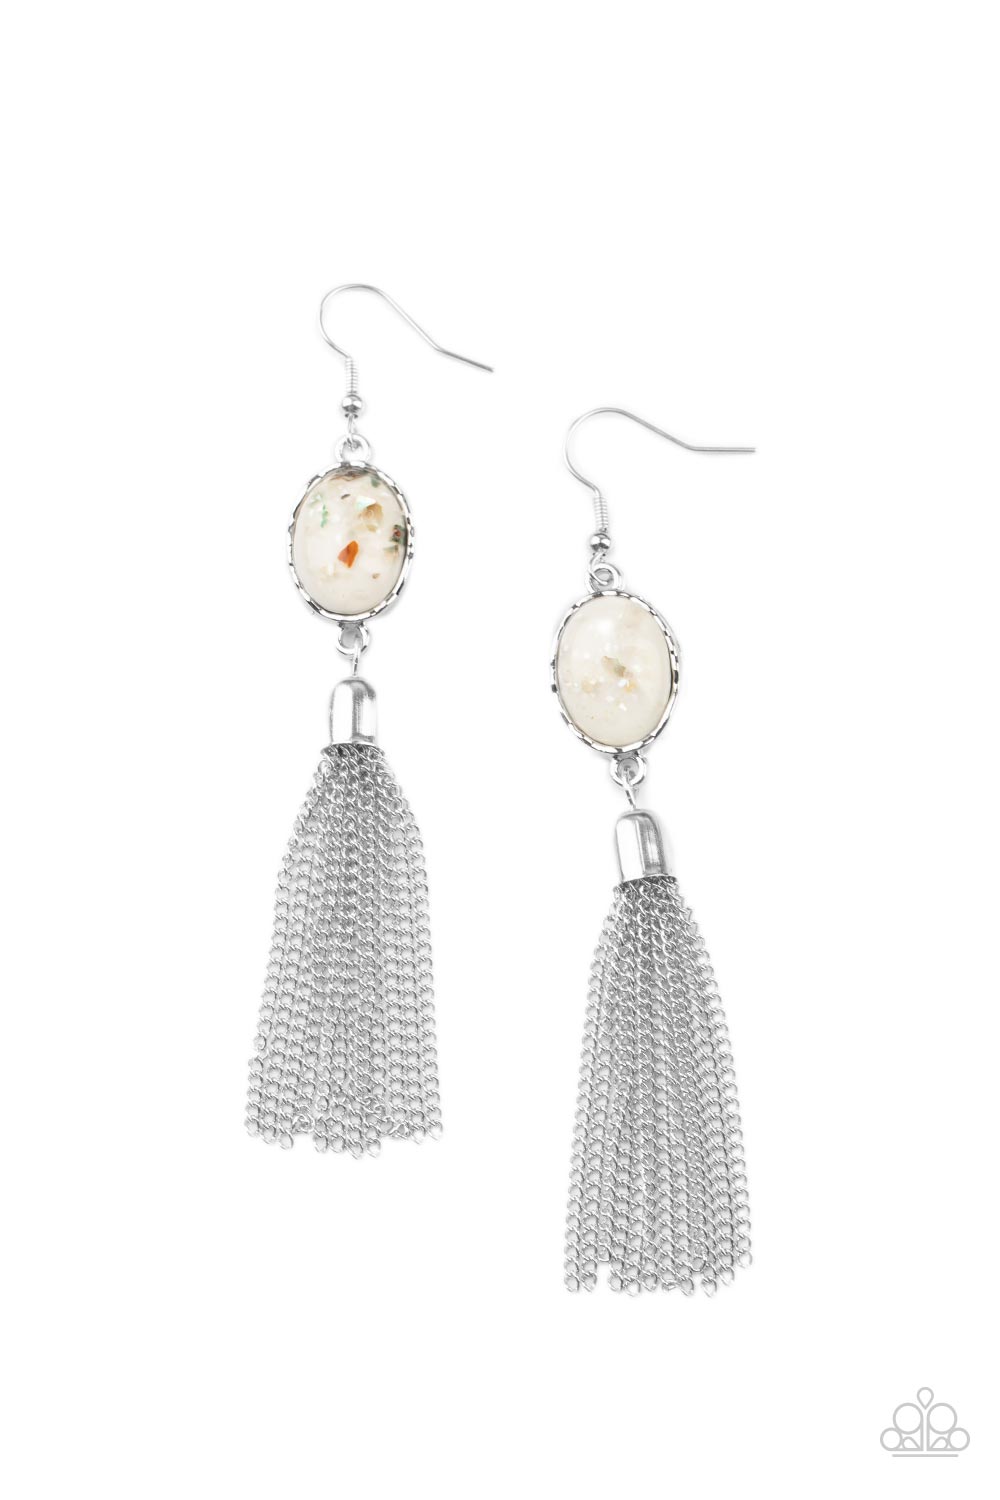 PRE-ORDER - Paparazzi Oceanic Opalescence - White - Earrings - $5 Jewelry with Ashley Swint